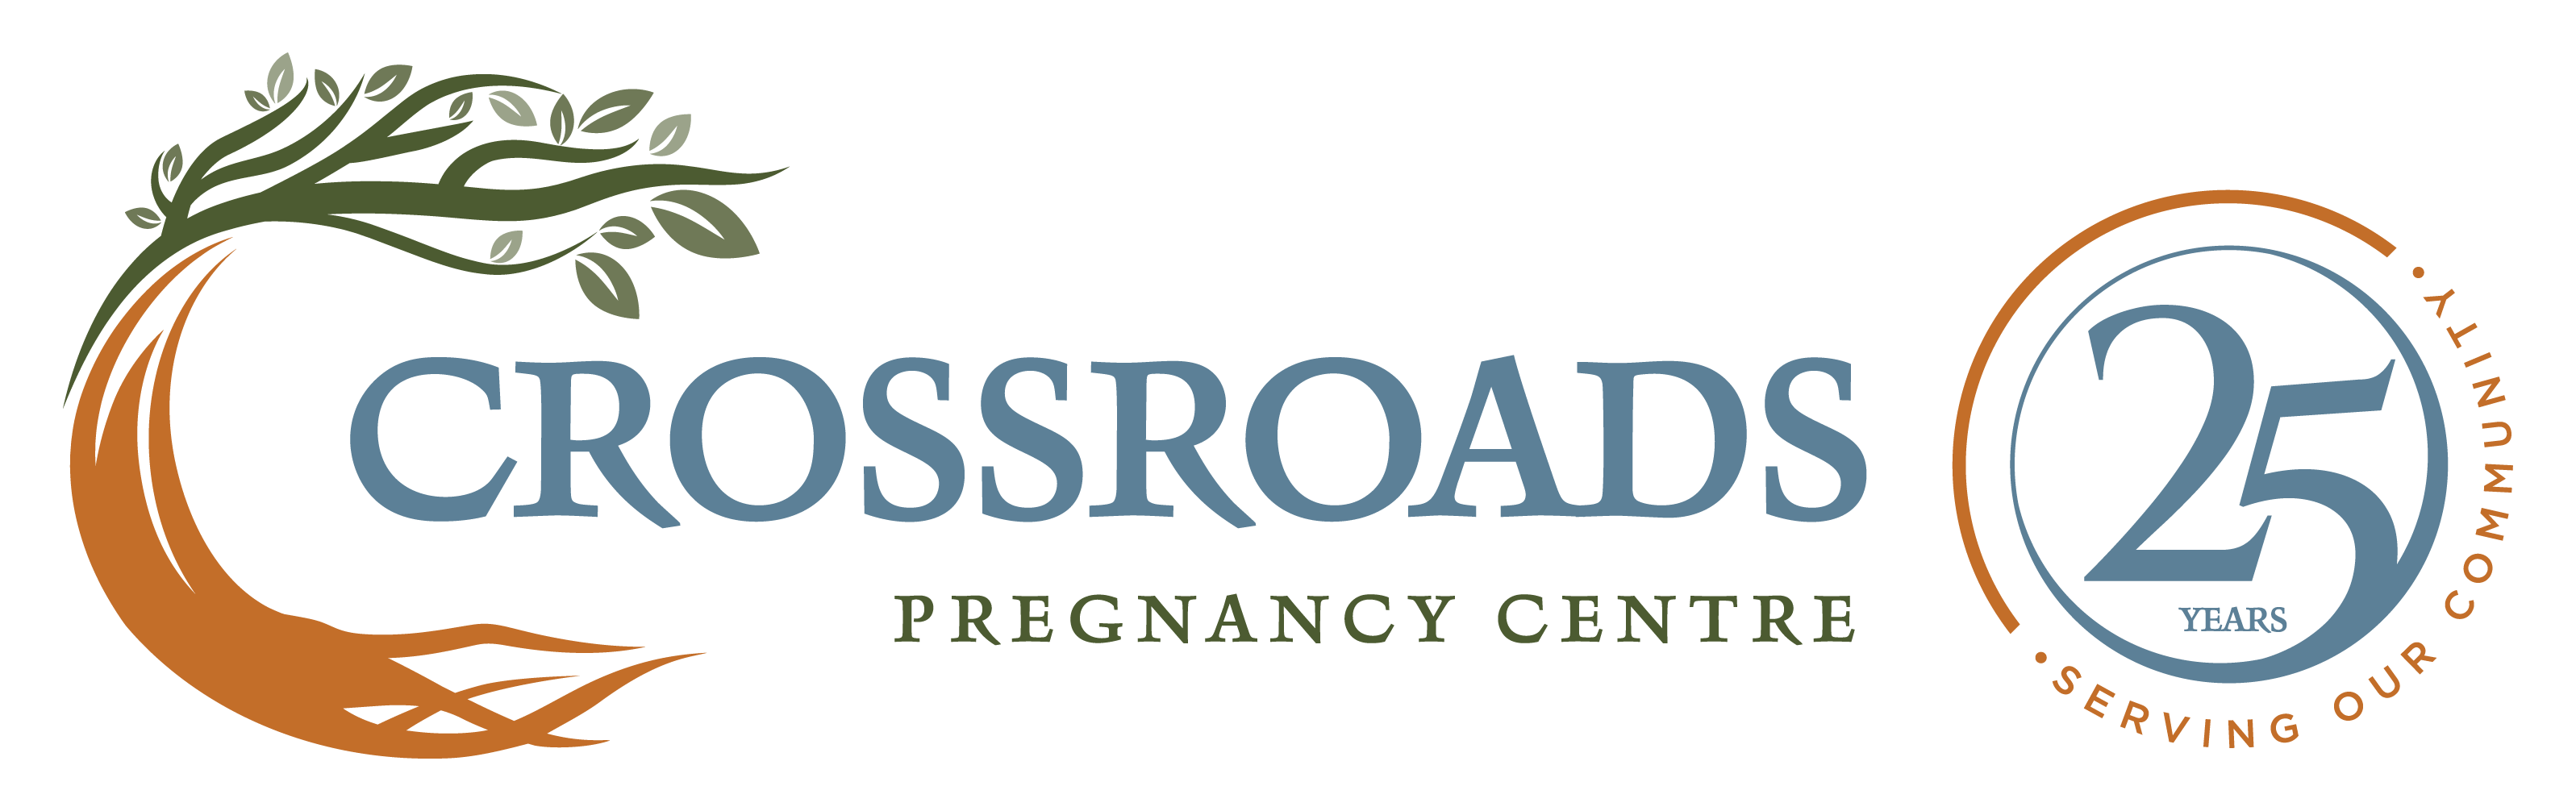 Crossroads Pregnancy Centre logo